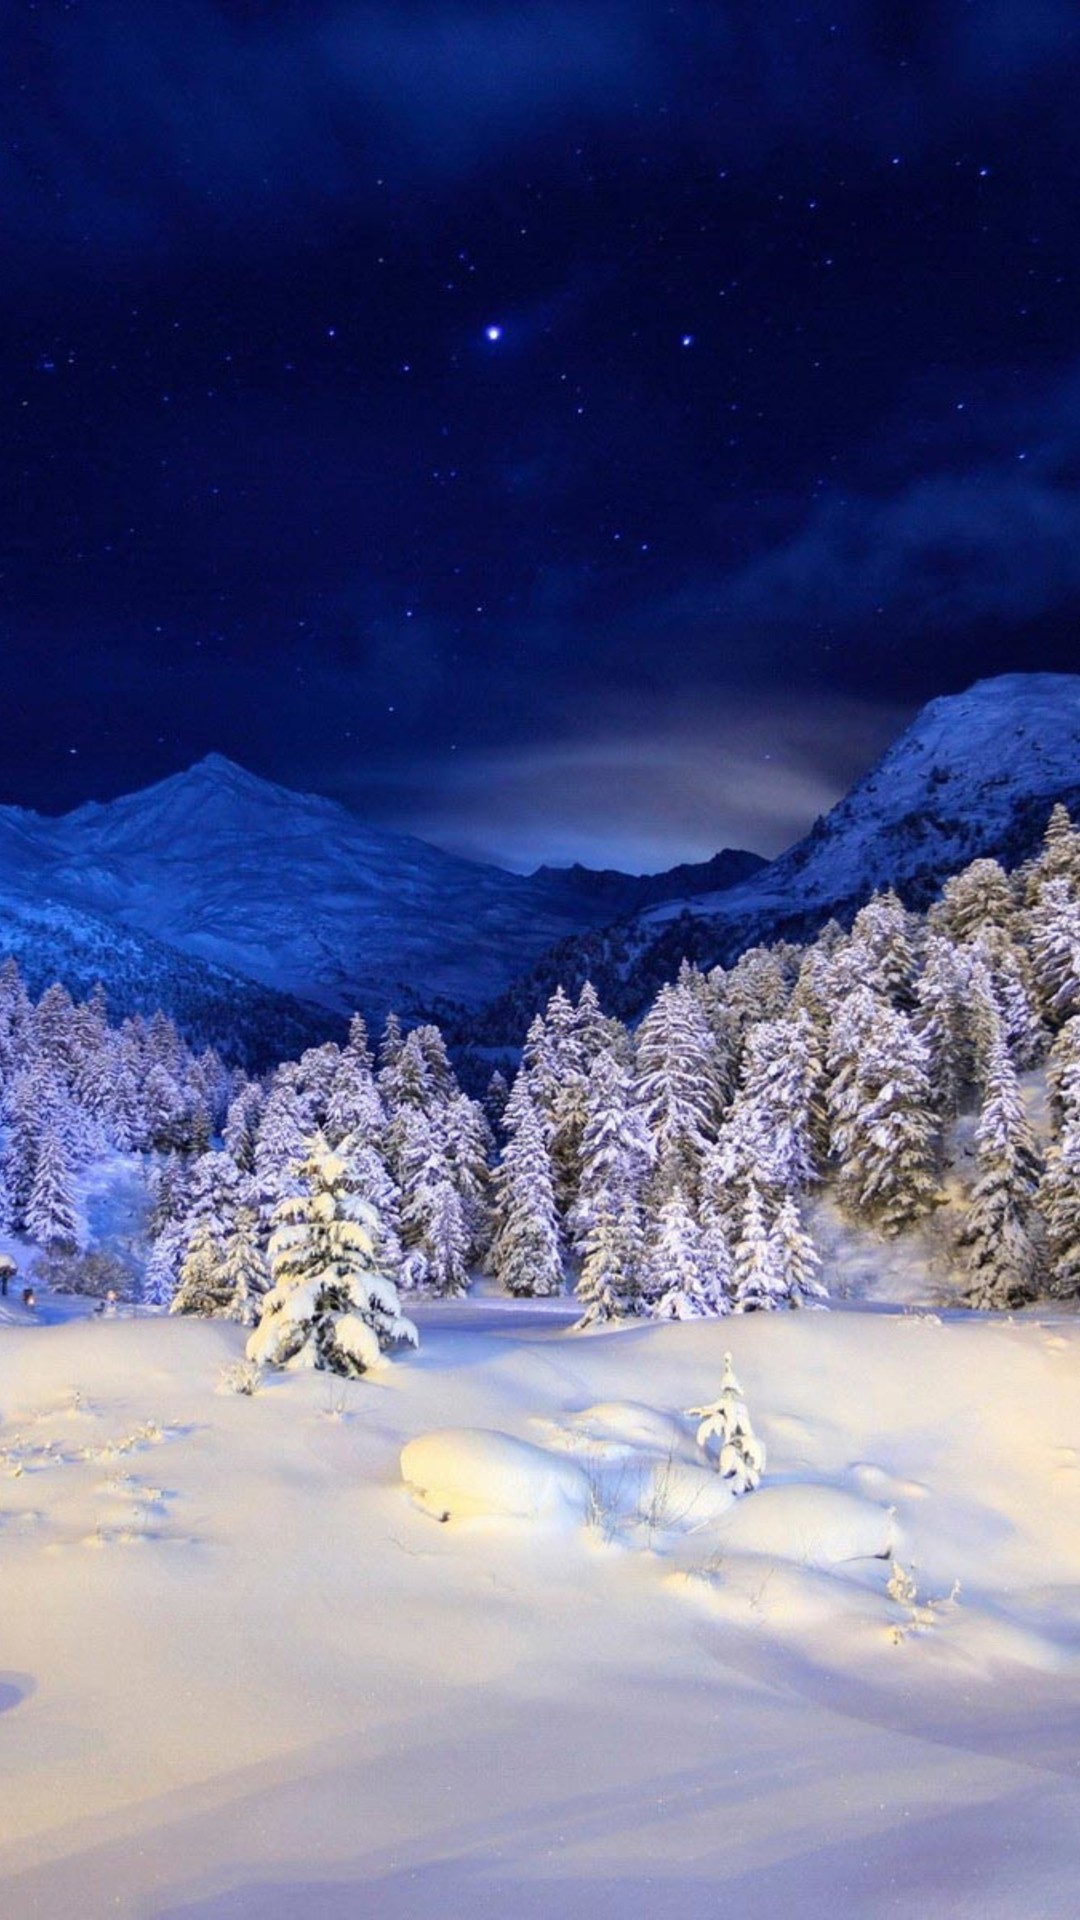 720x1280 hd壁紙android,自然,空,自然の風景,雪,冬